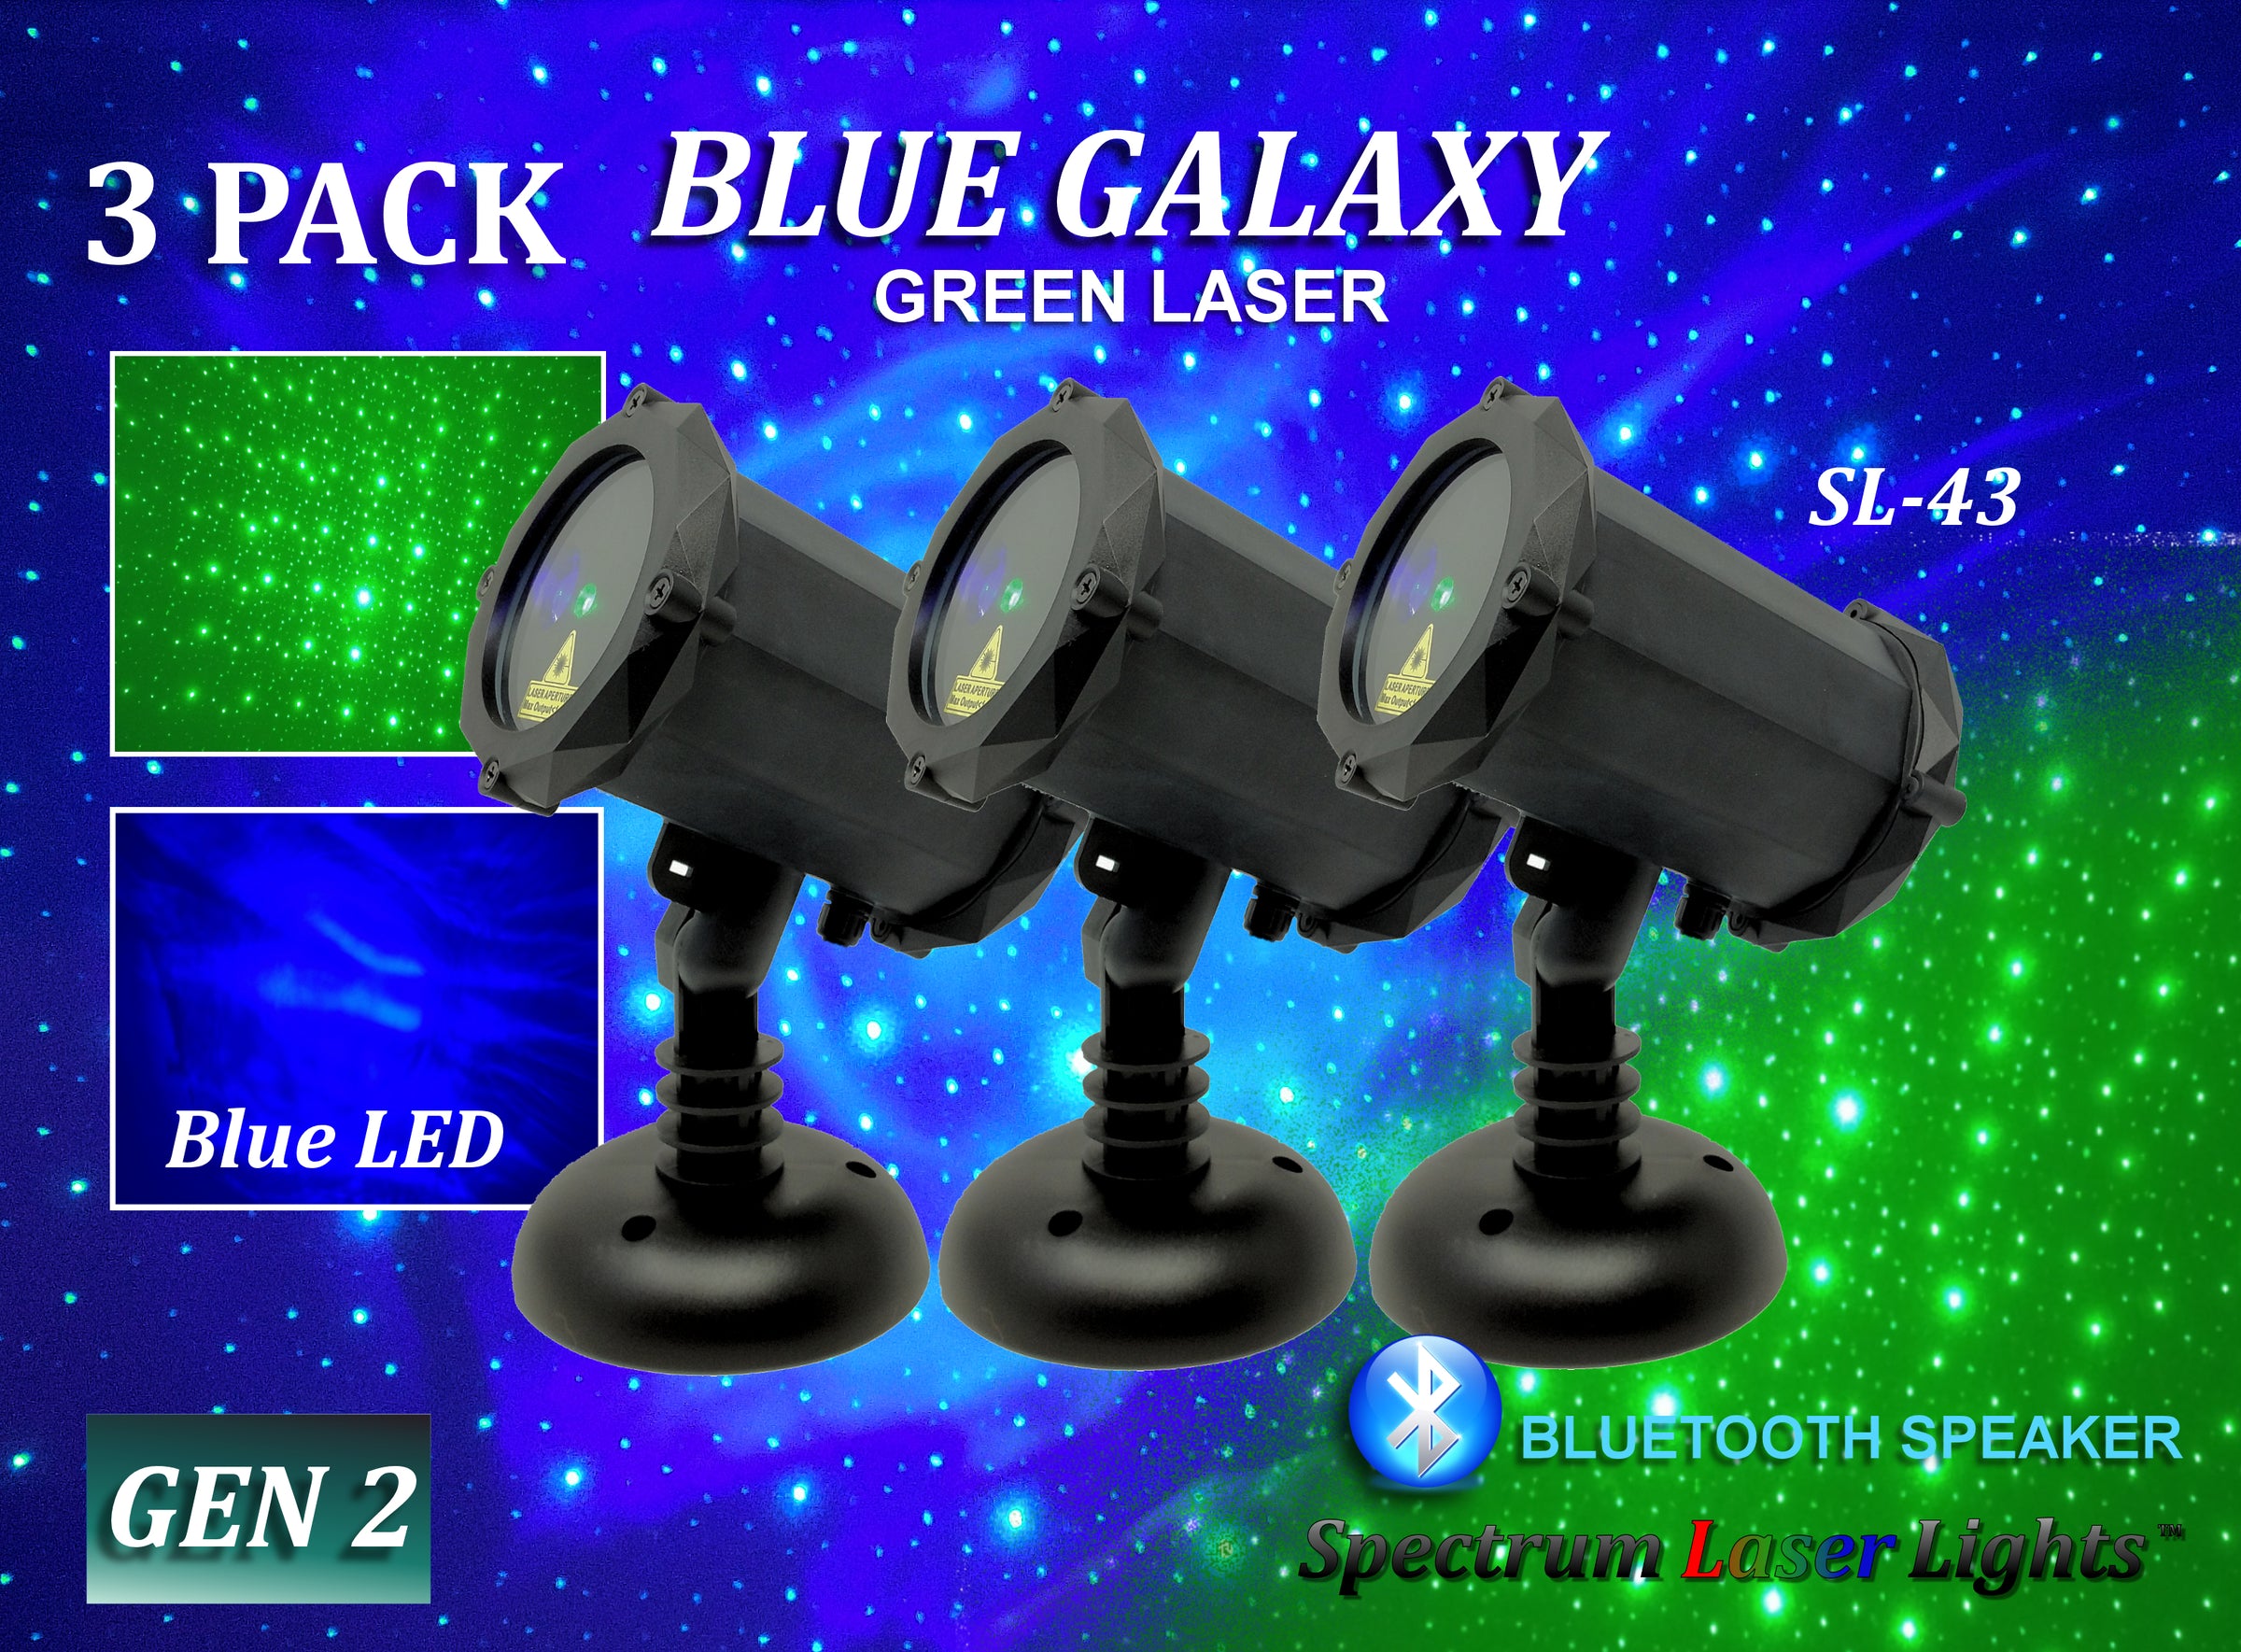 SL-43 - 3 Pack - Blue Galaxy | Green Laser Christmas Light with Bluetooth Speaker - 2nd GEN v2 - Spectrum Laser Lights